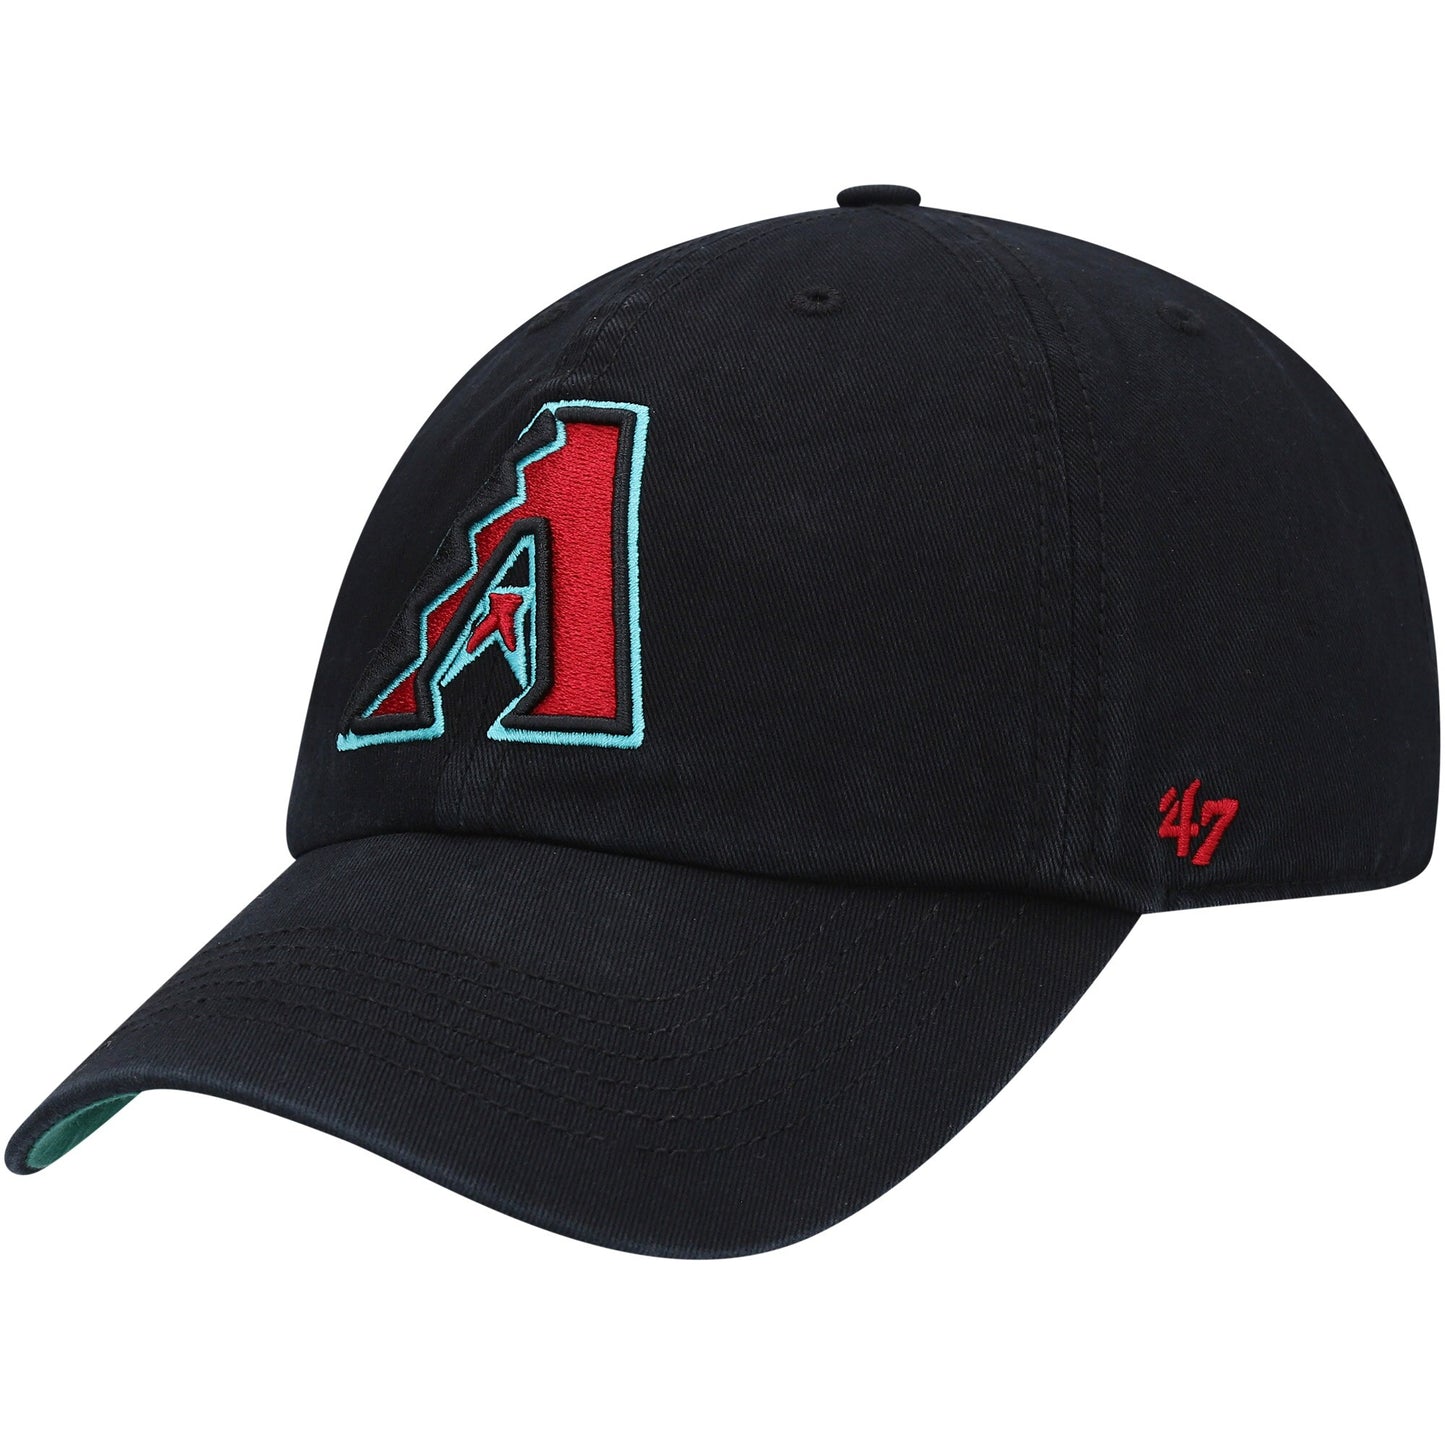 Arizona Diamondbacks '47 Team Franchise Fitted Hat - Black